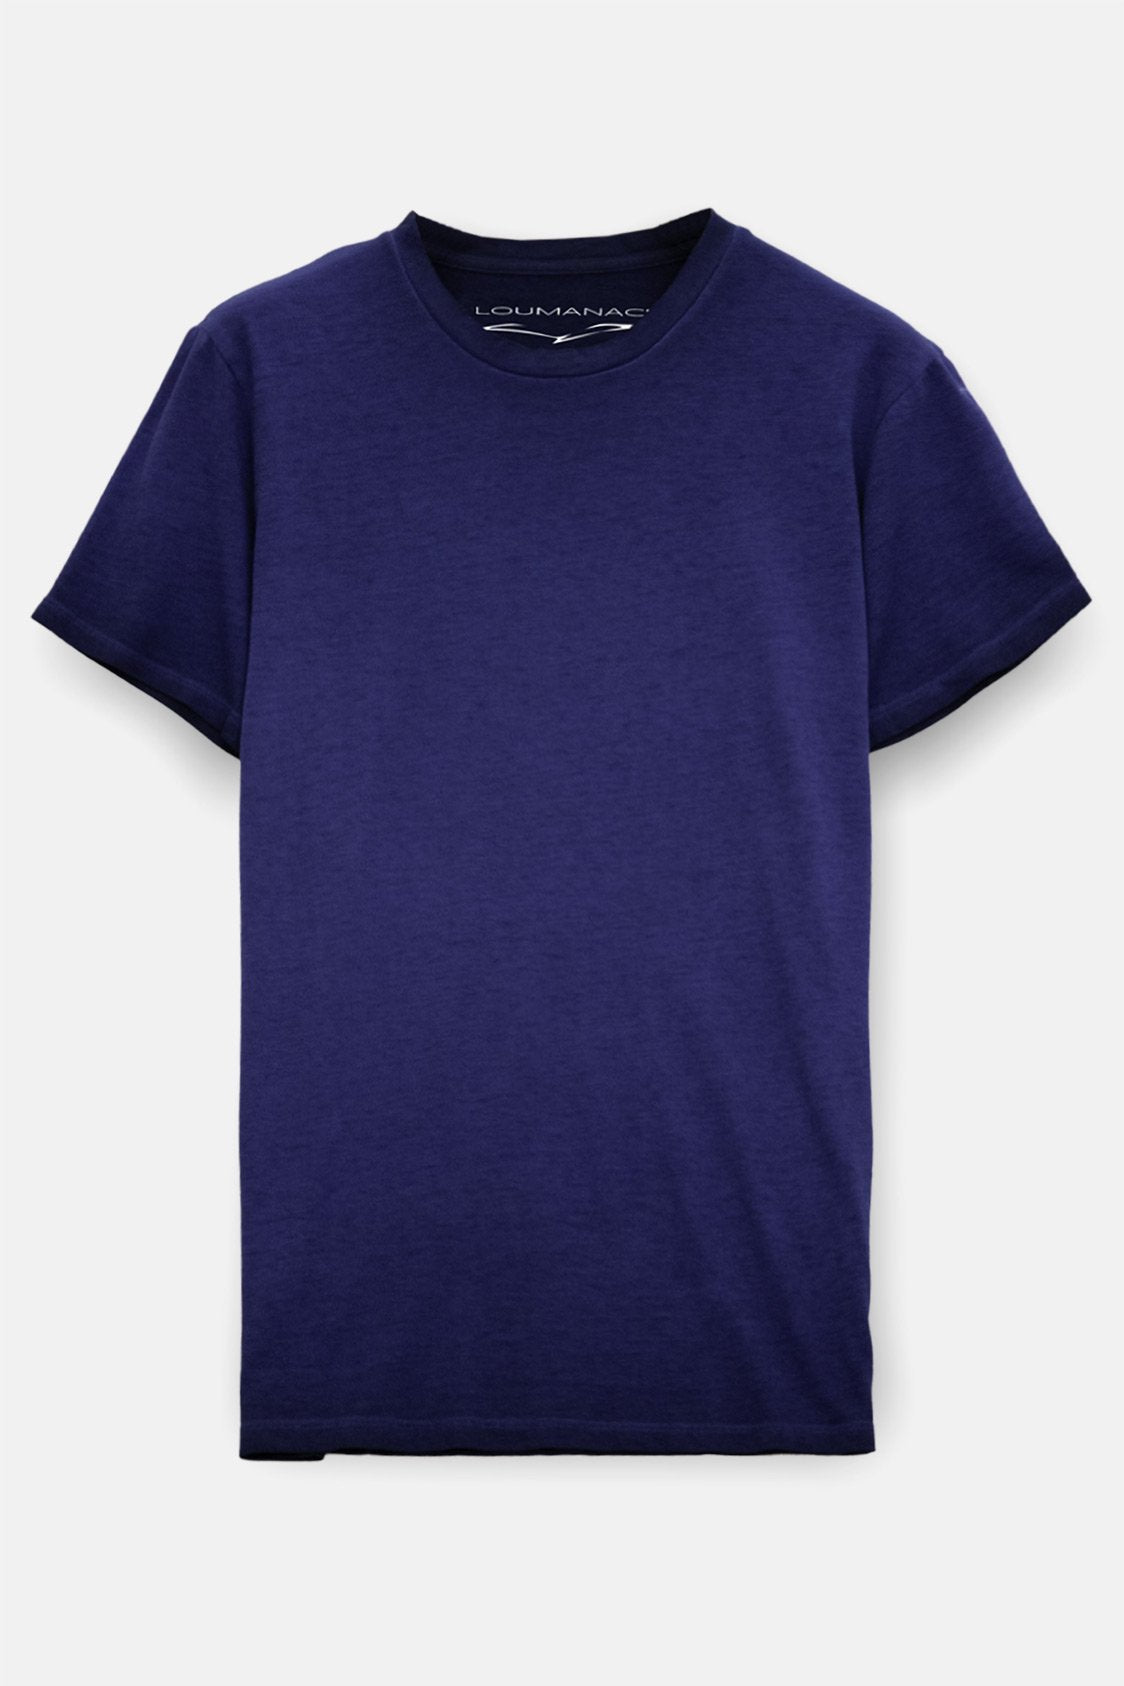 midnight blue cotton t-shirt